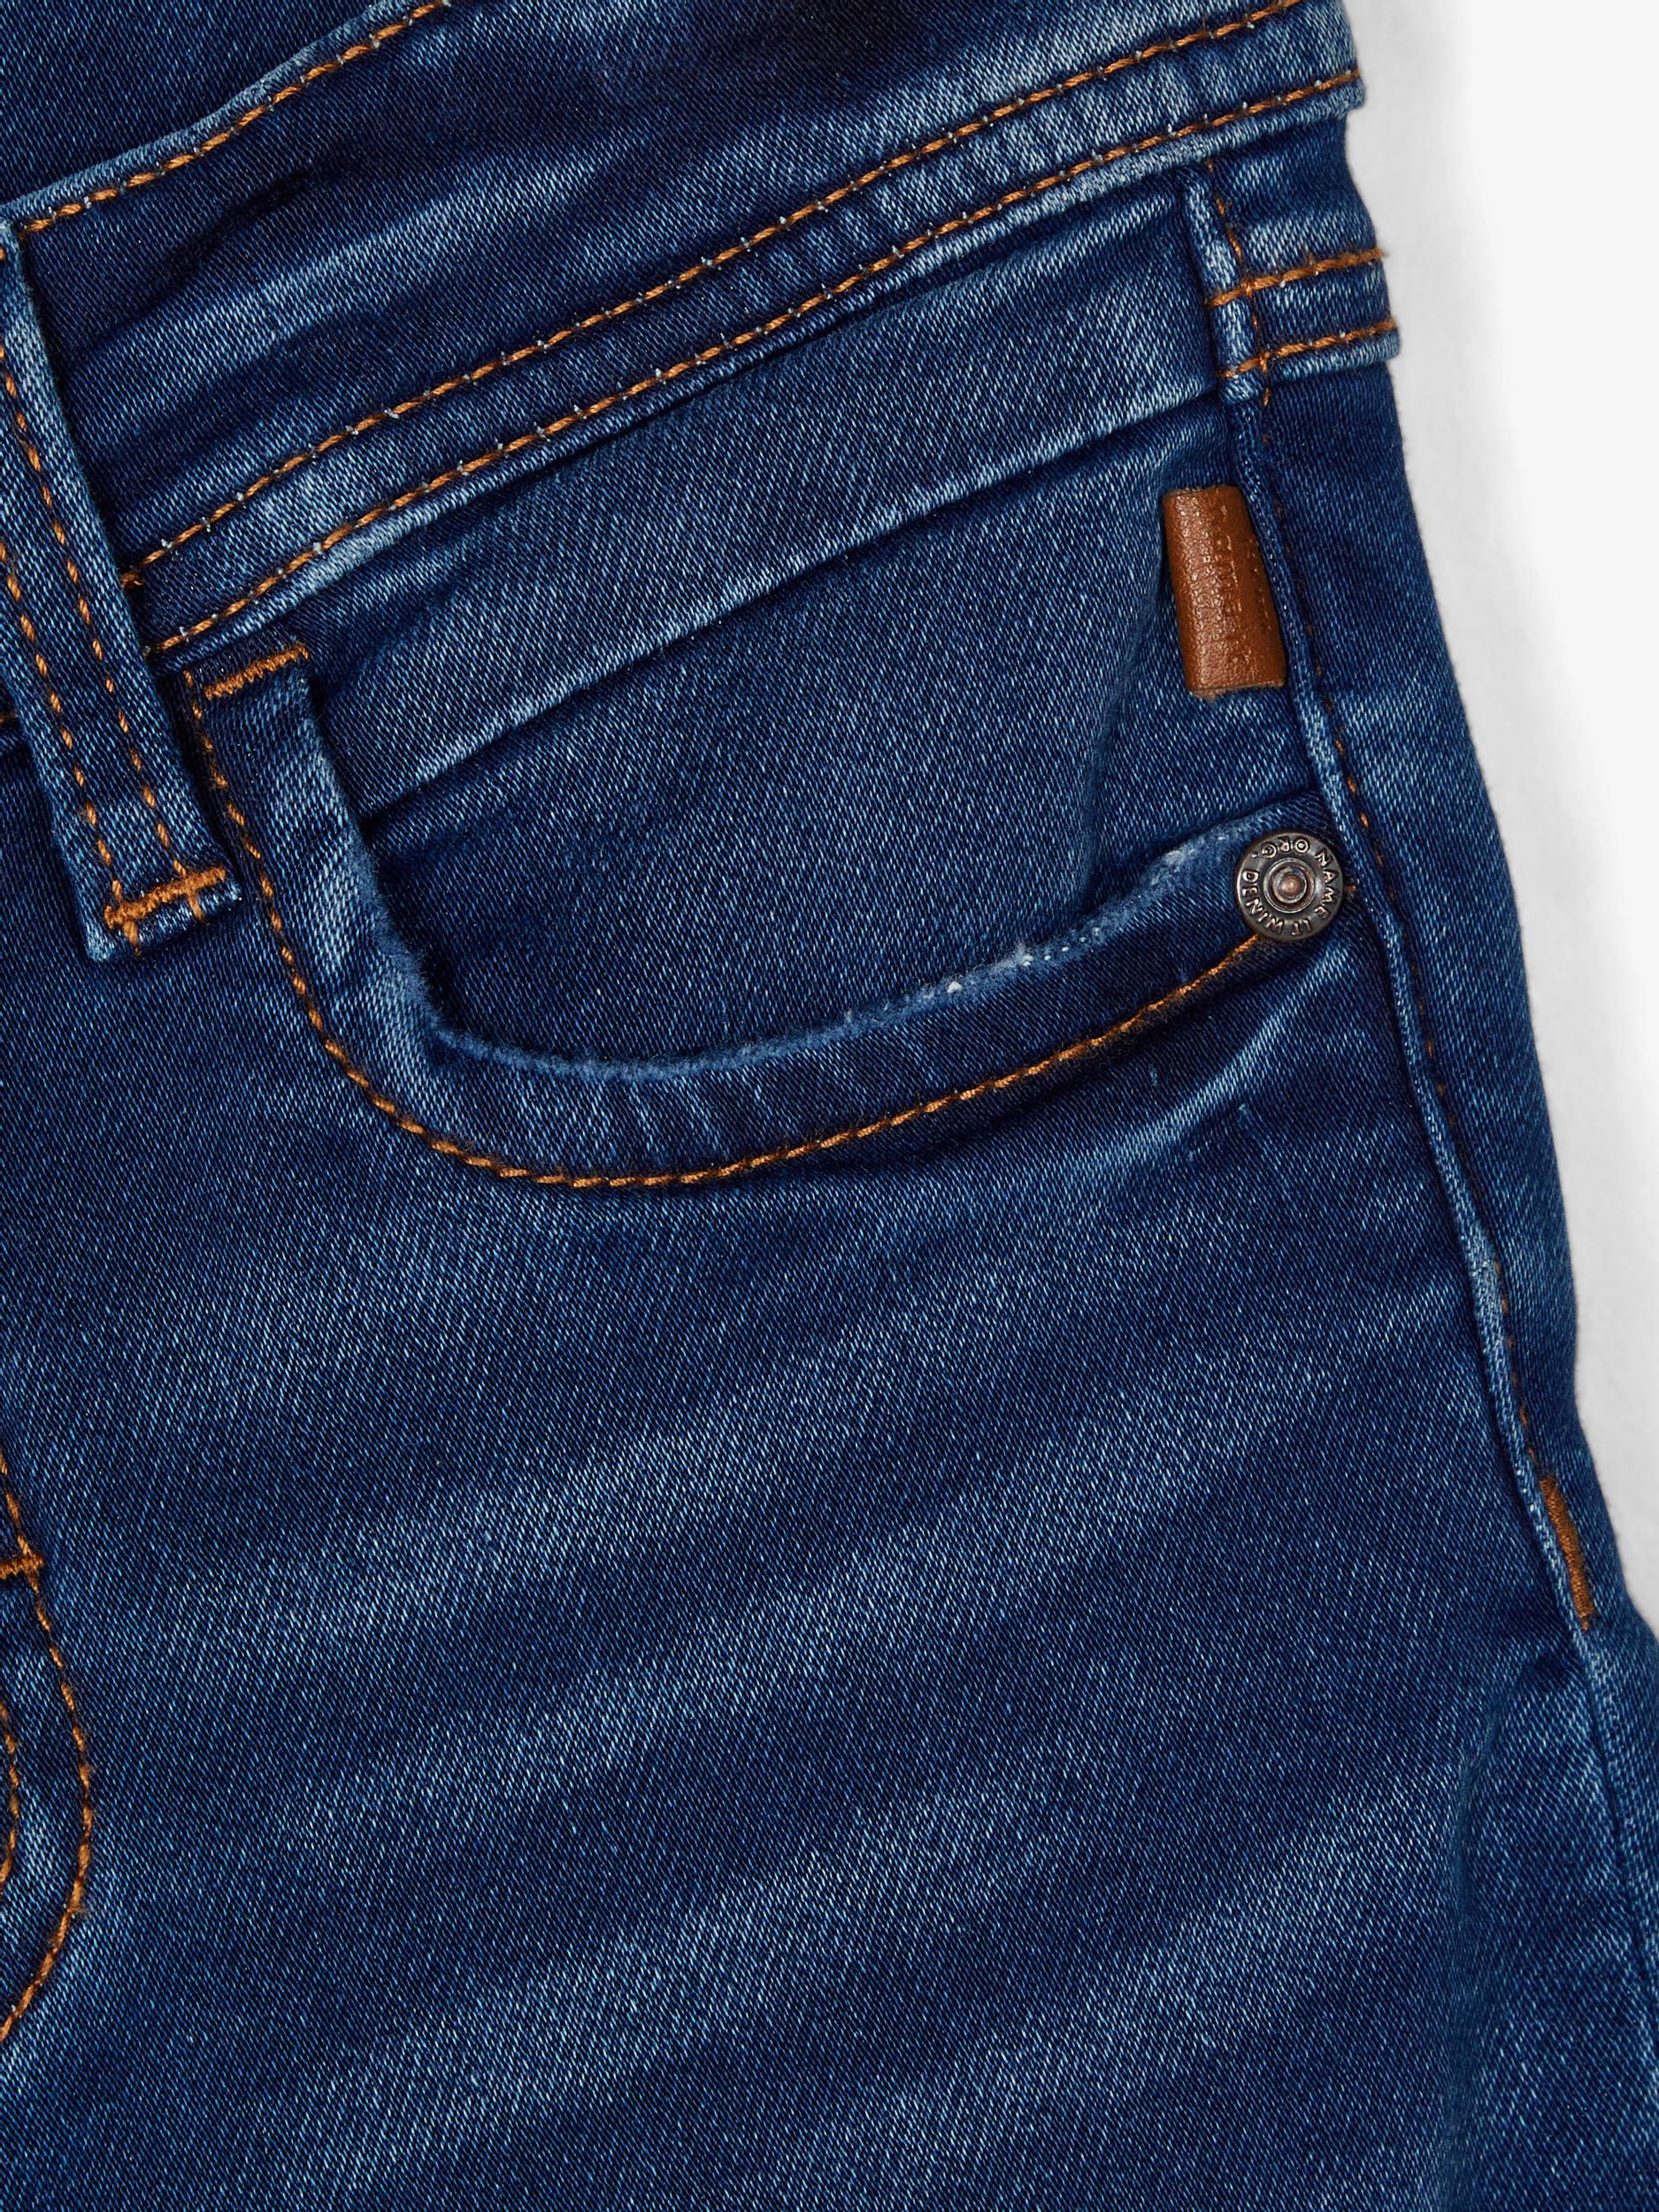  Theo Times Jeans, Dark Blue Denim, 116 cm